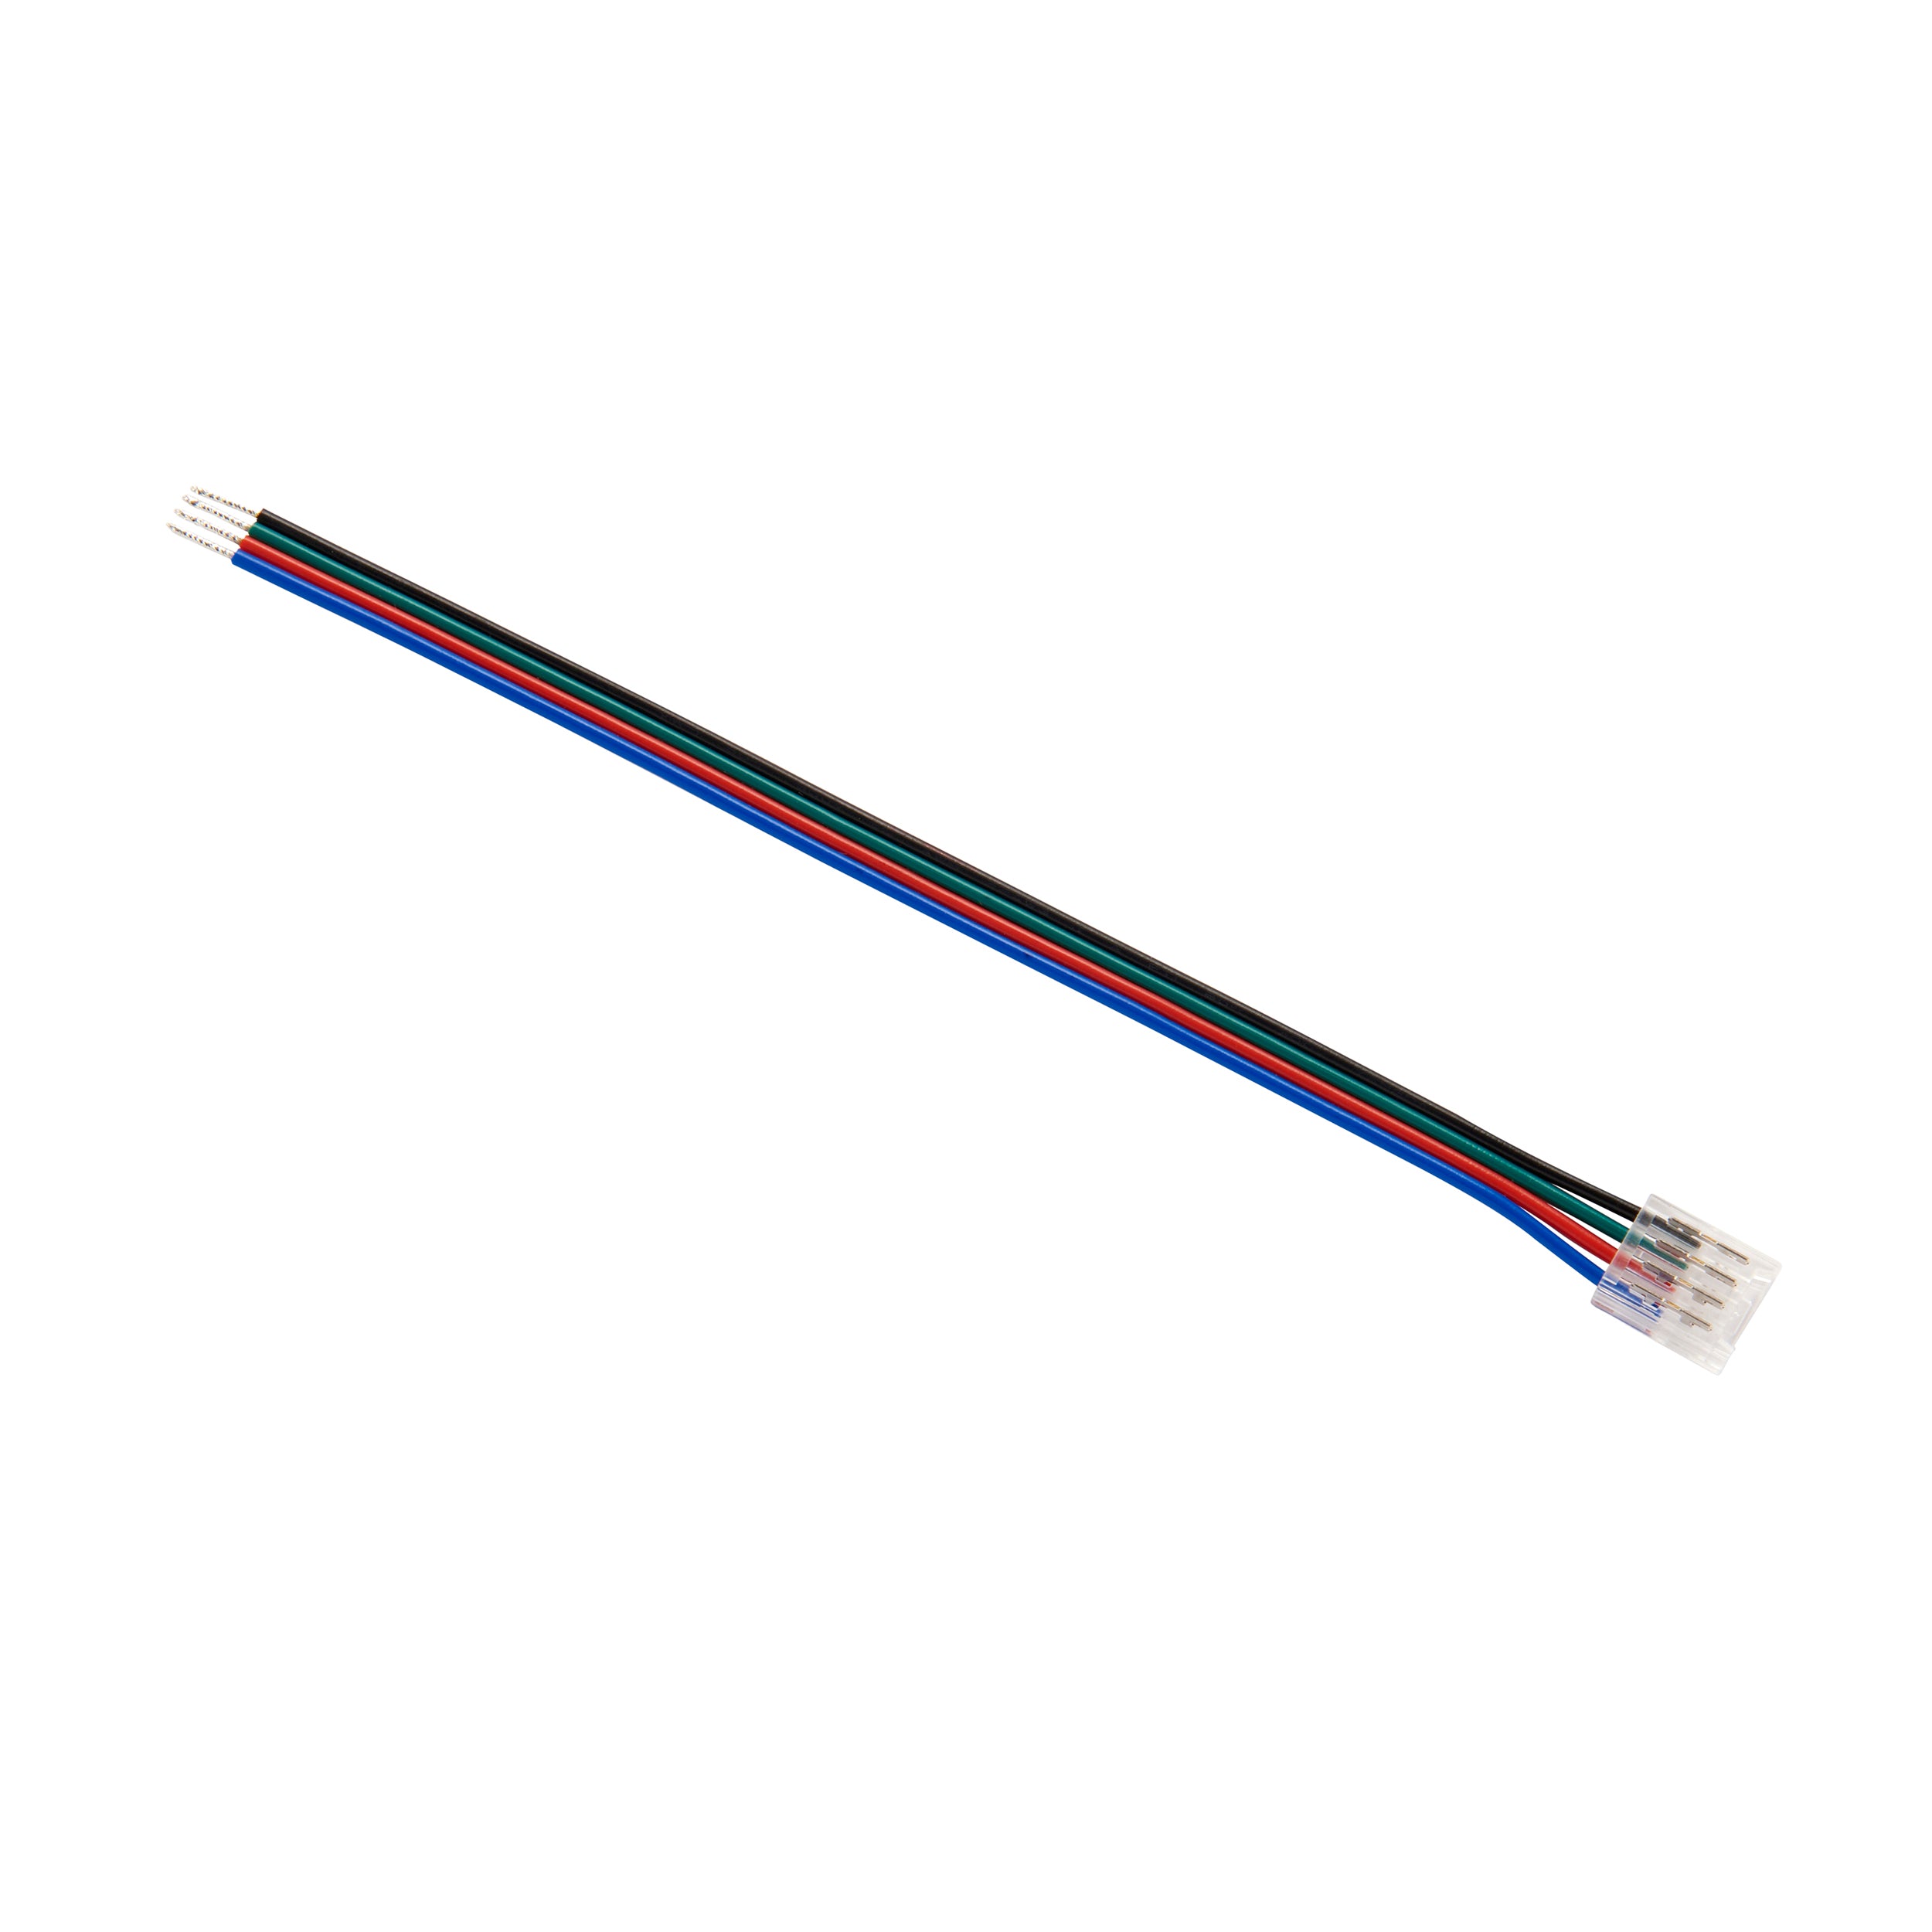 OrionRGB Flexible Strip to Strip Connector